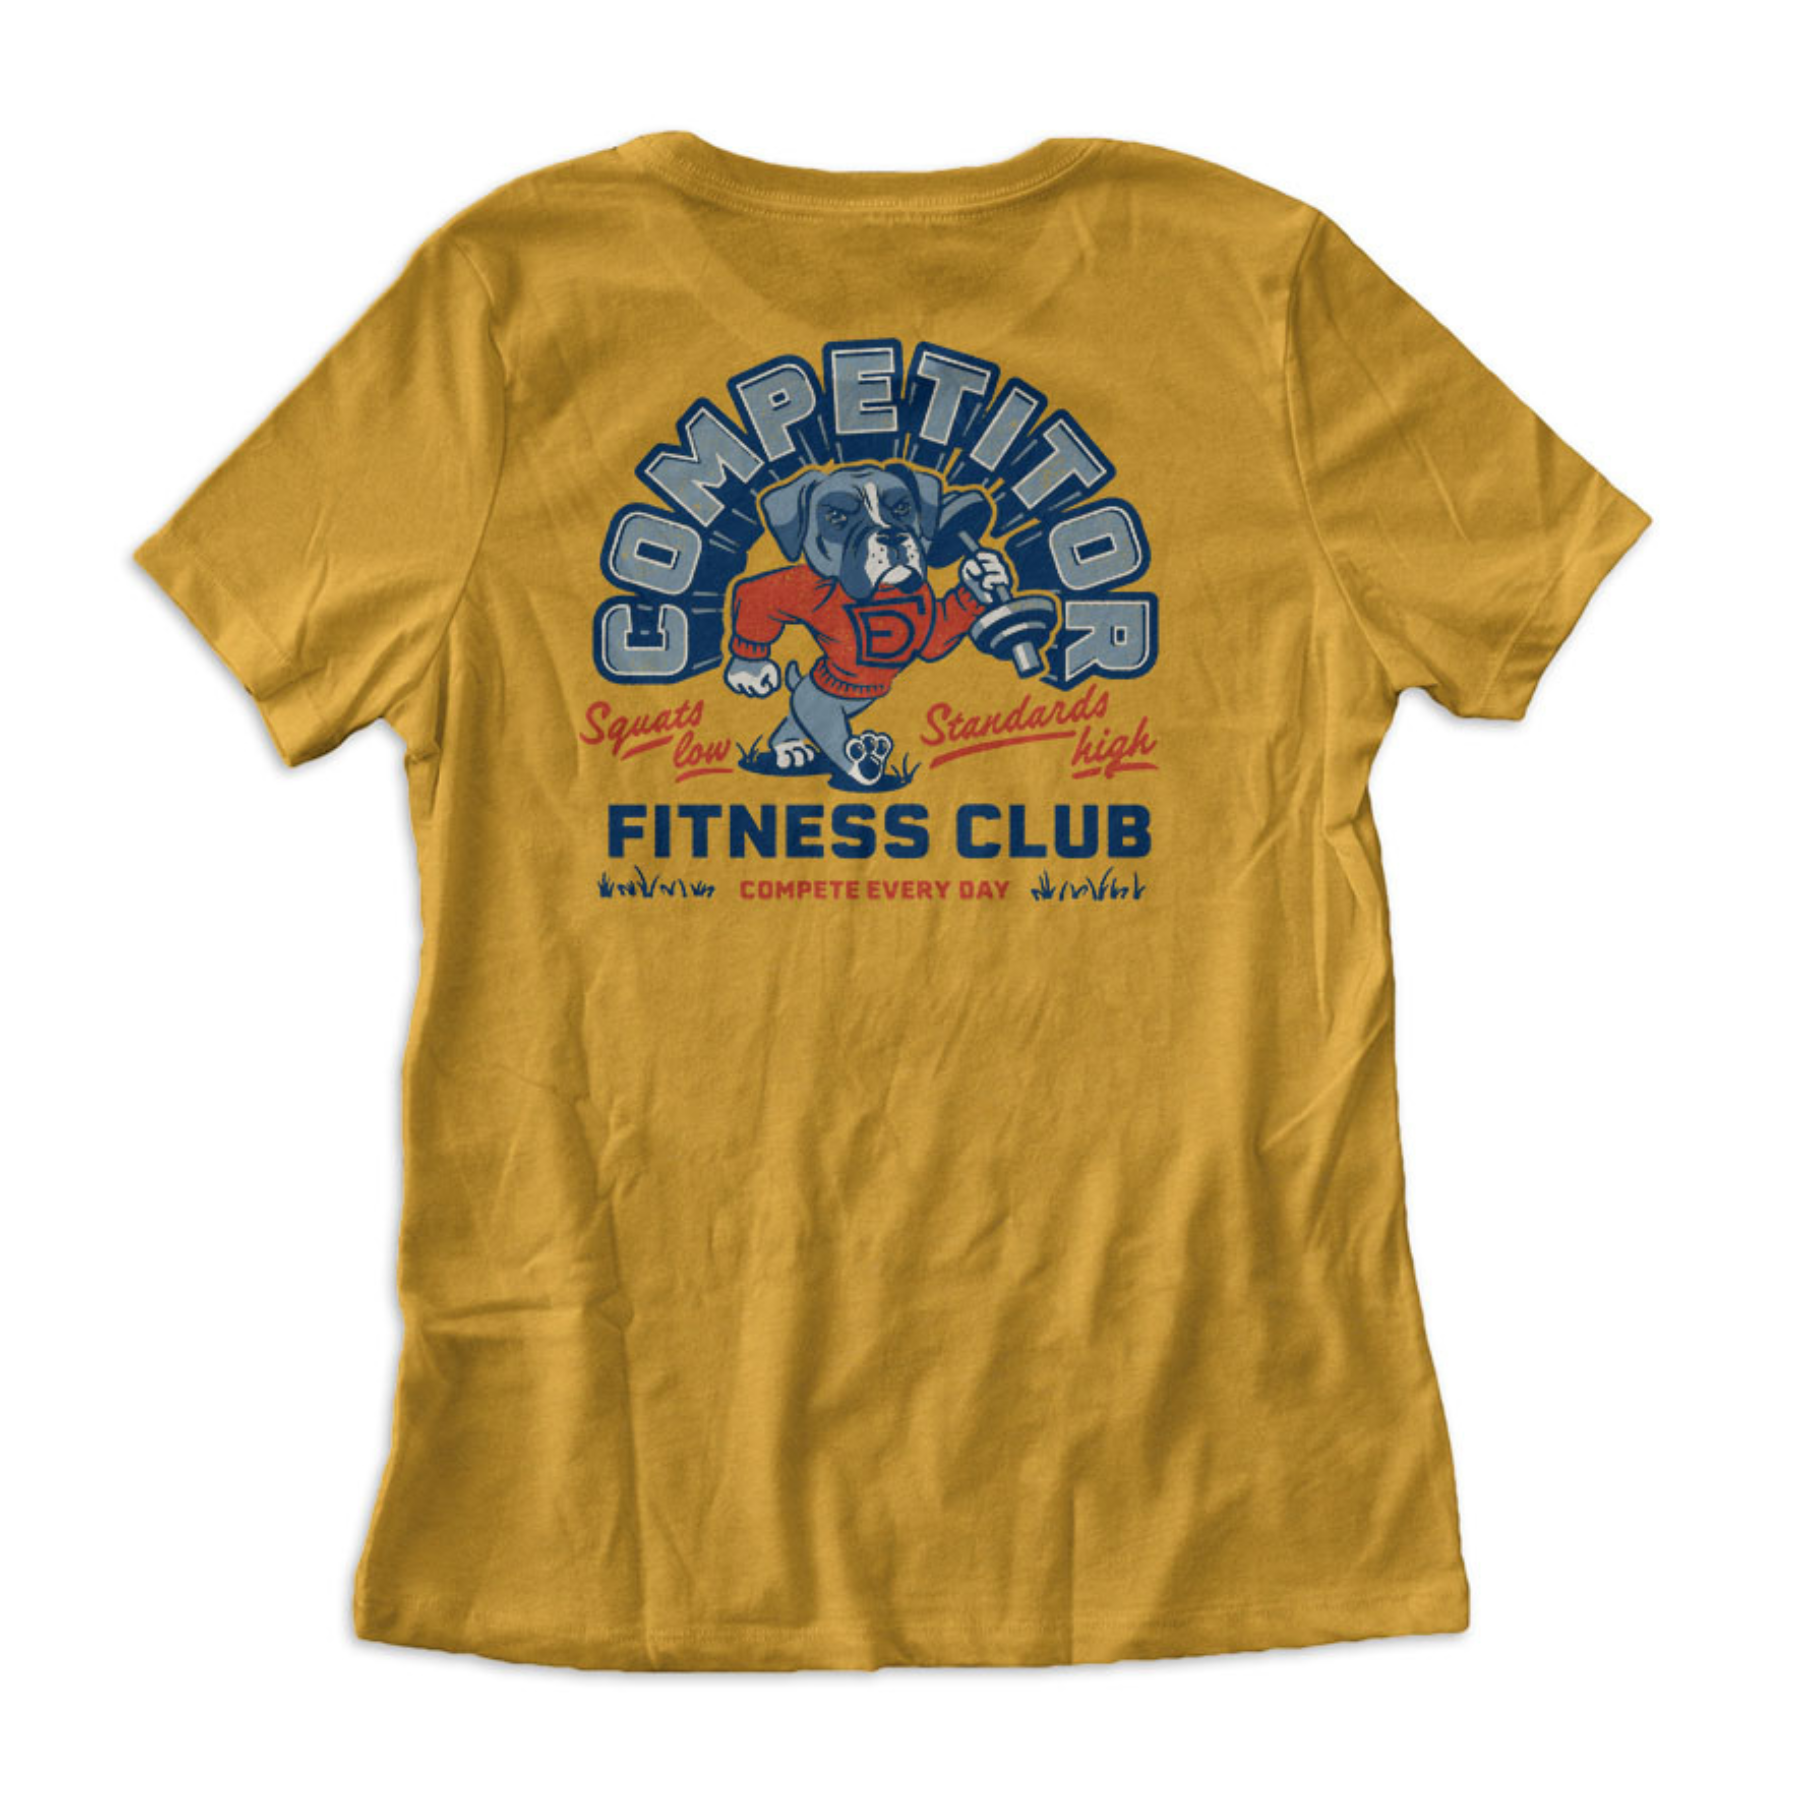 Competitor Fitness Club women's mustard shirt